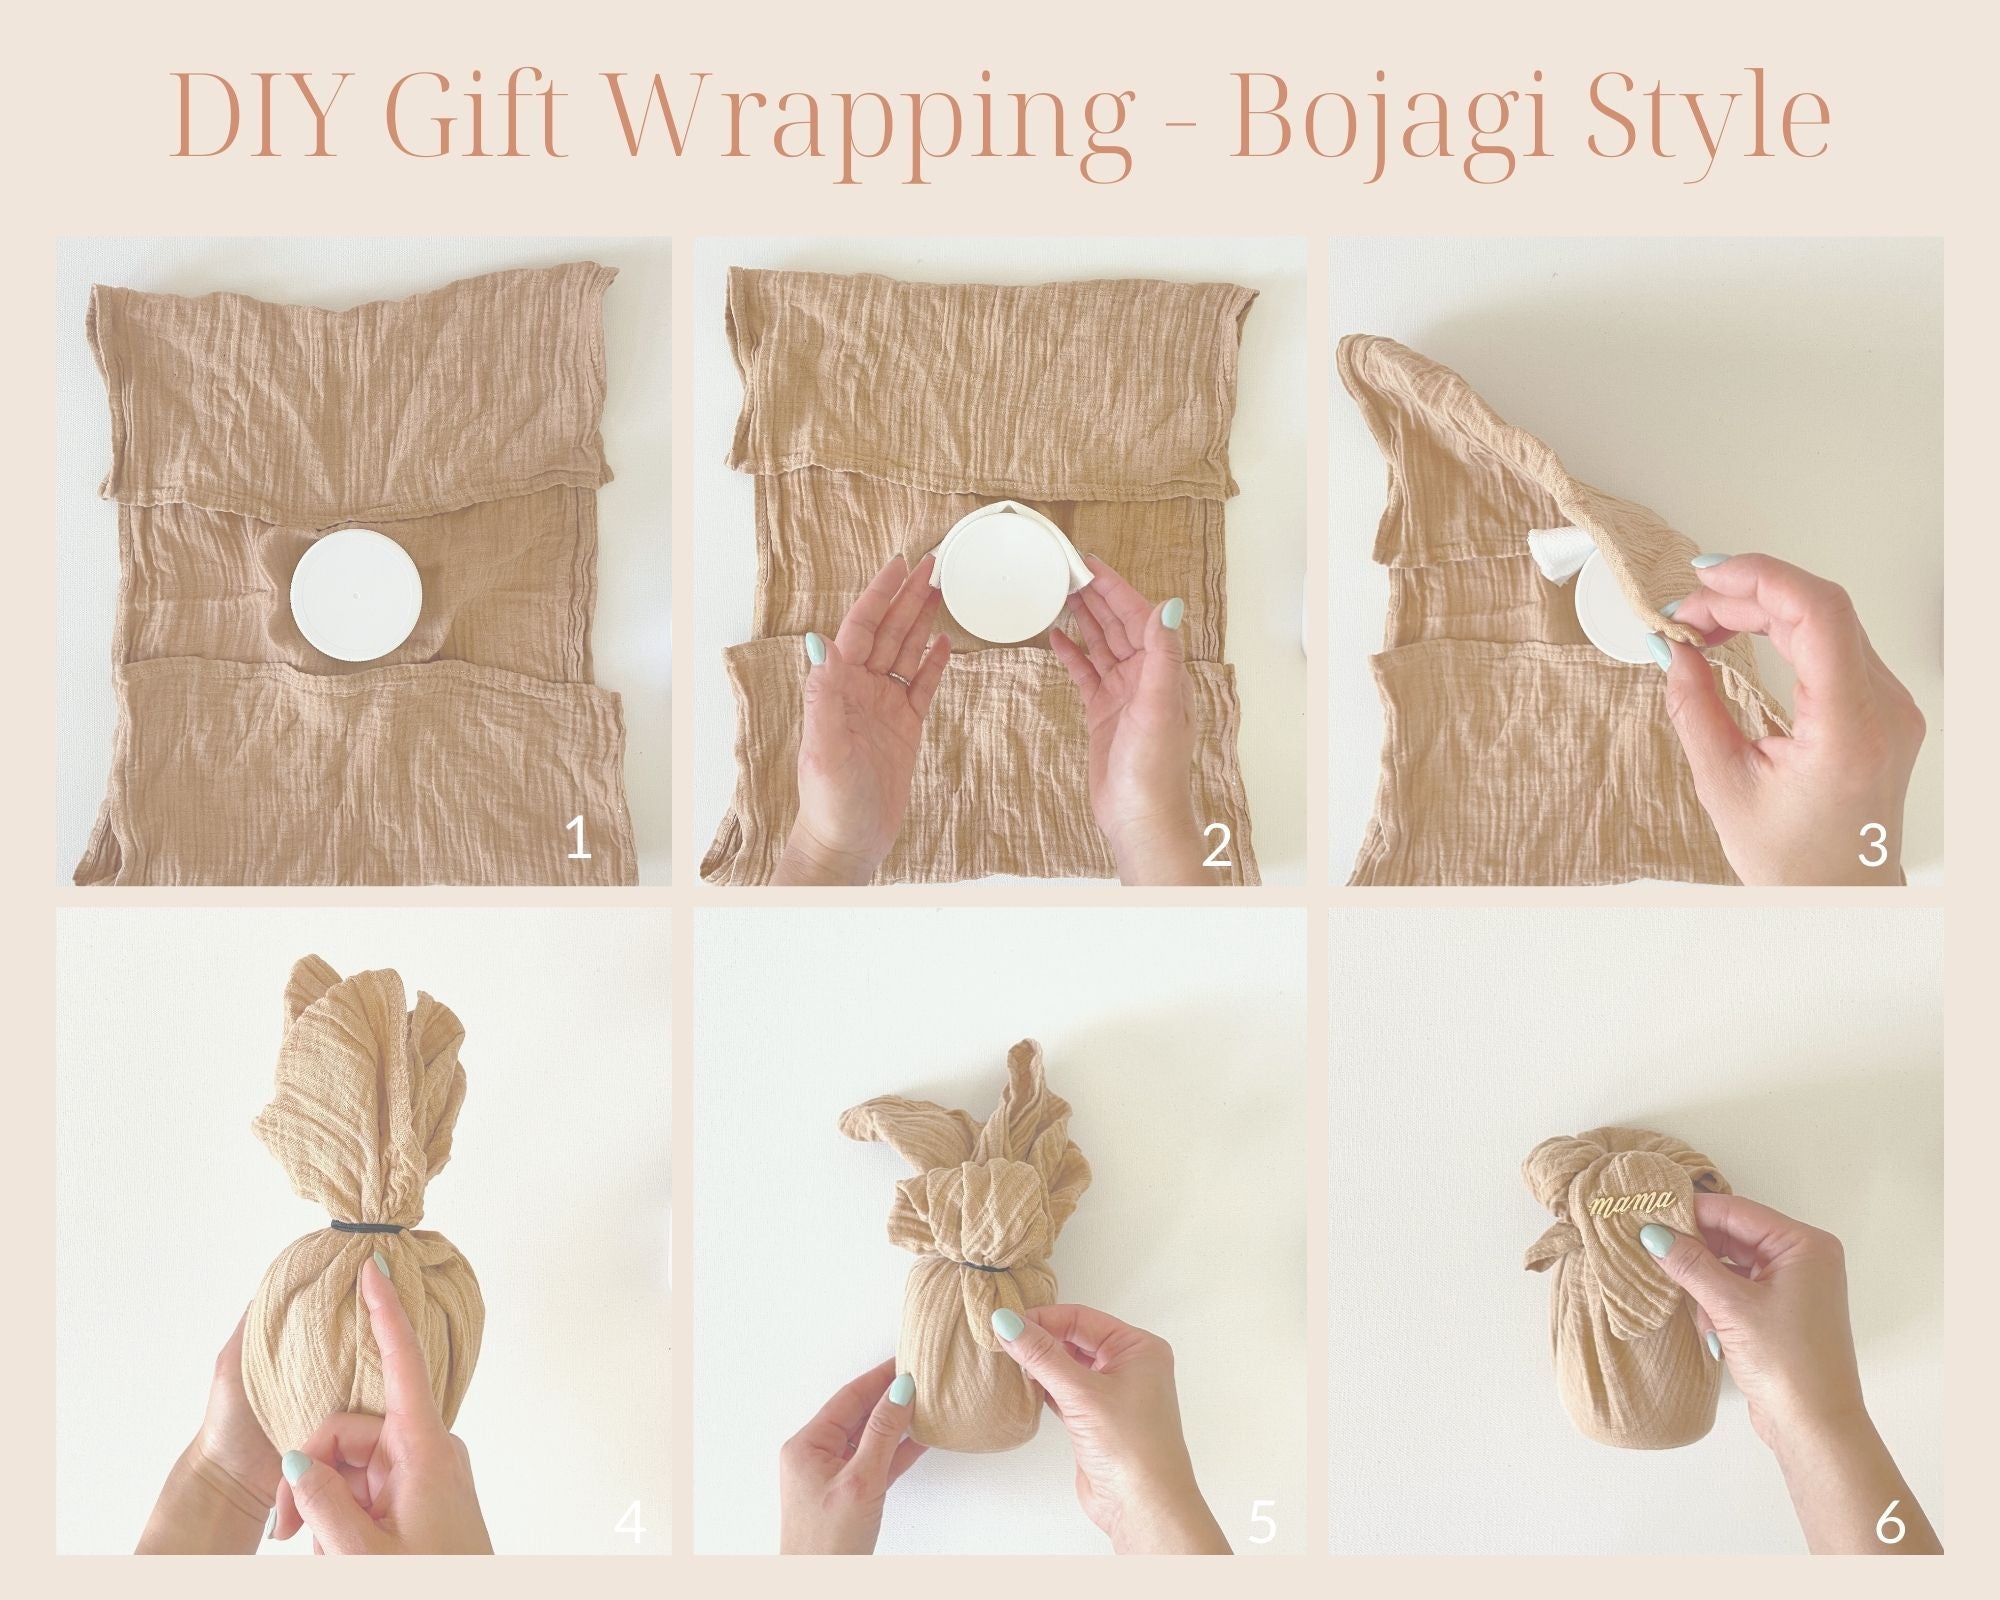 DIY Gif Wrapping - Bojagi Style. 6 steps to wrap Gather 33 Soak in Love set